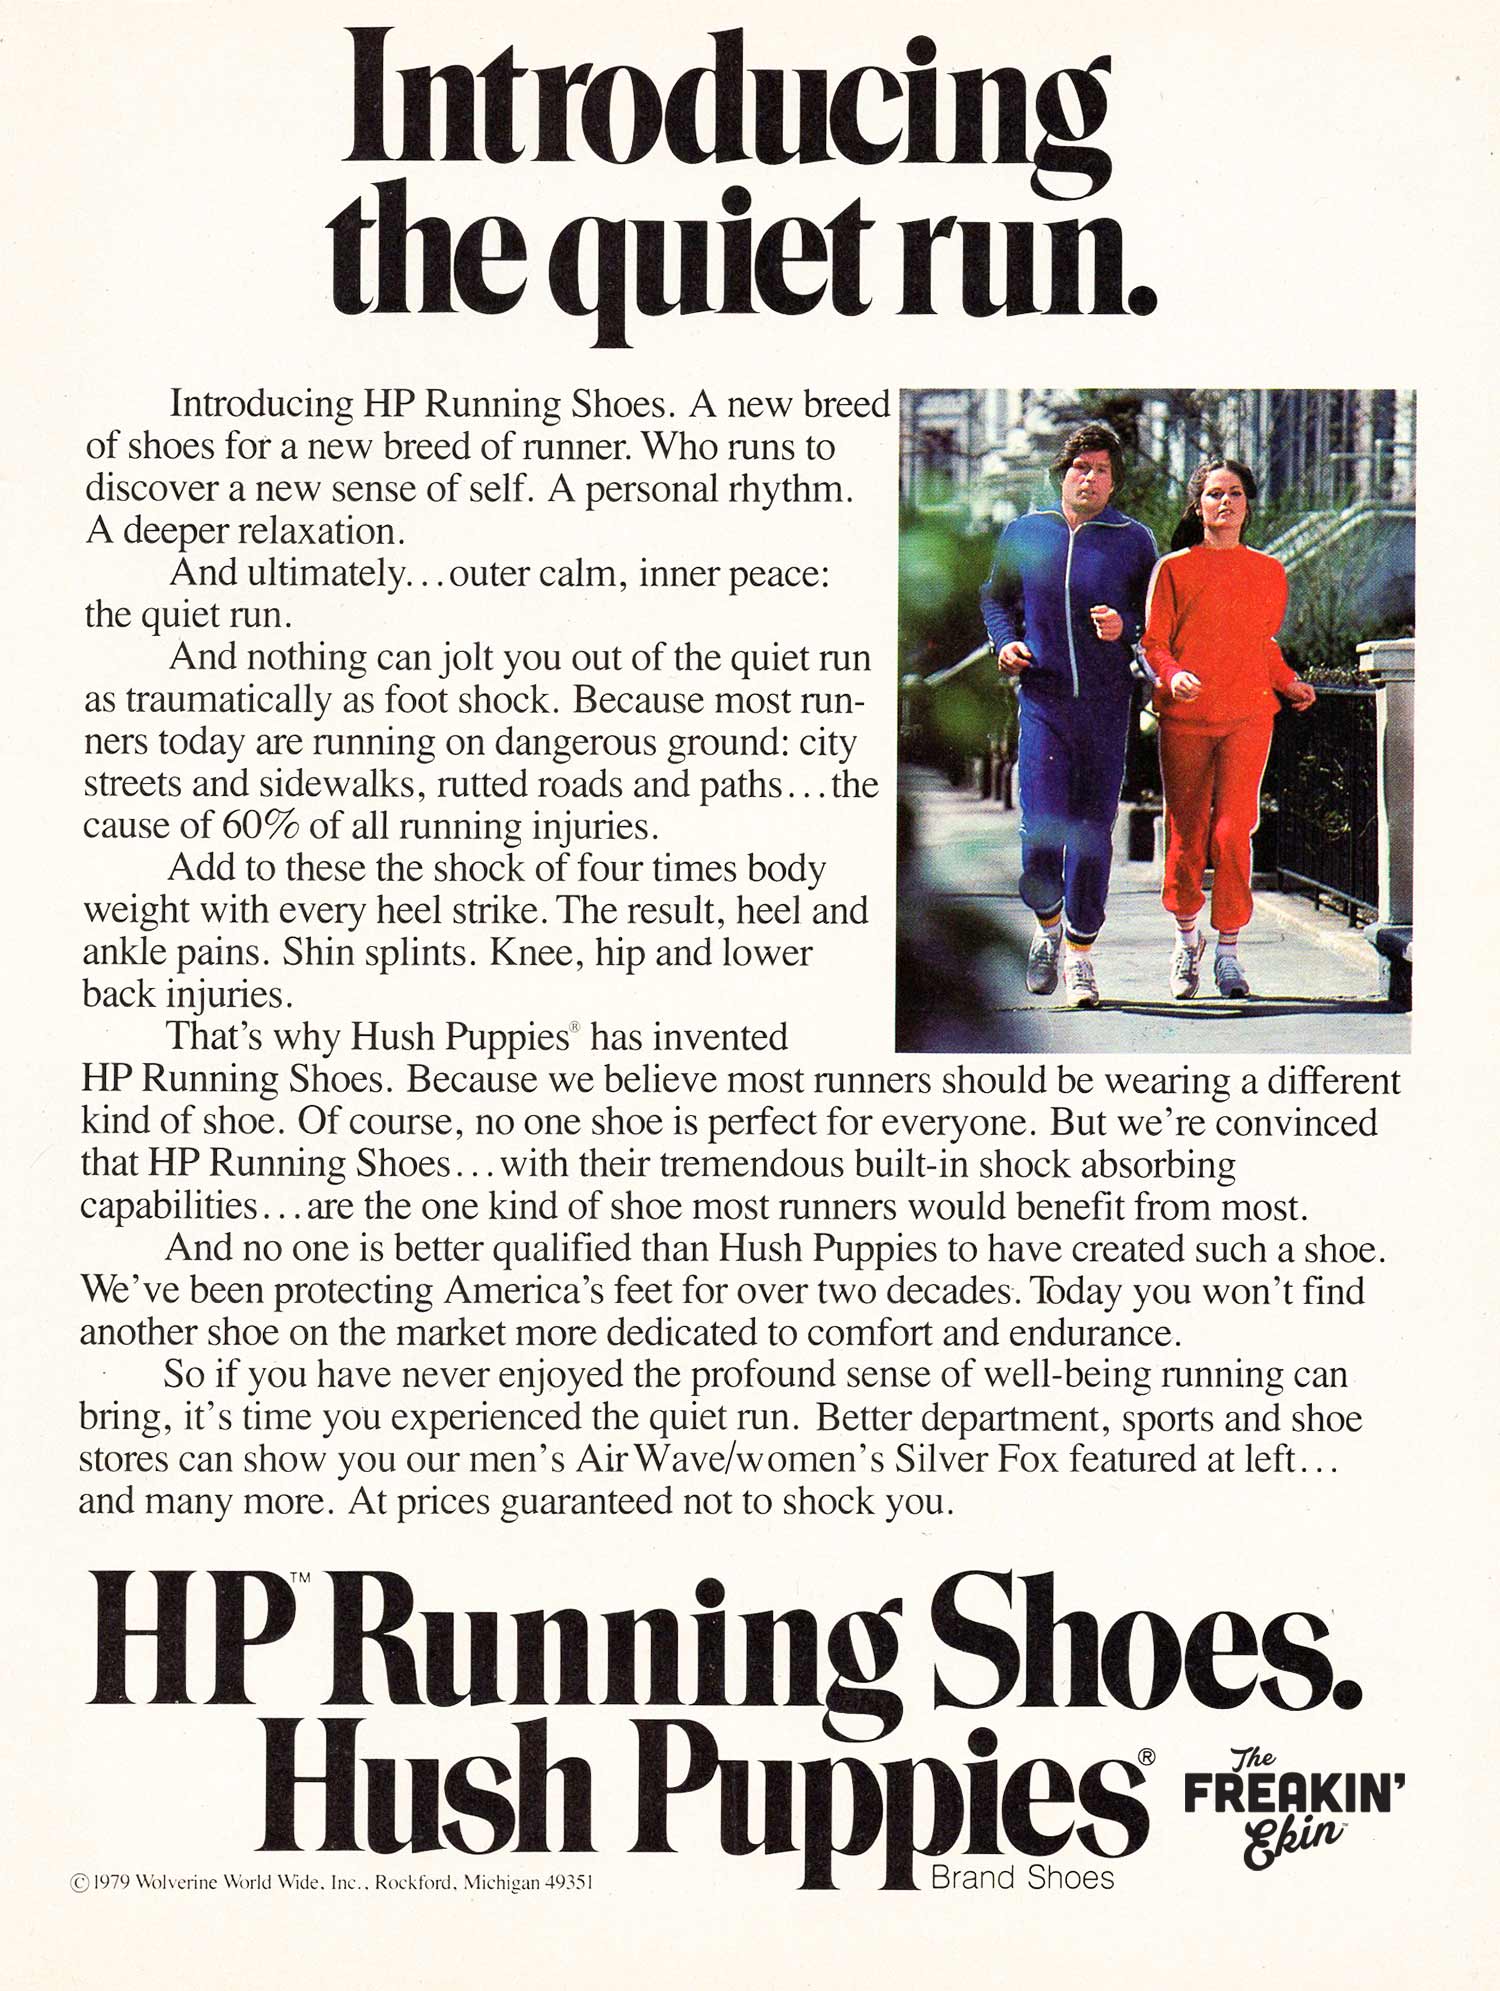 Hush Puppies 1979 vintage running shoe ad @ The Freakin Ekin